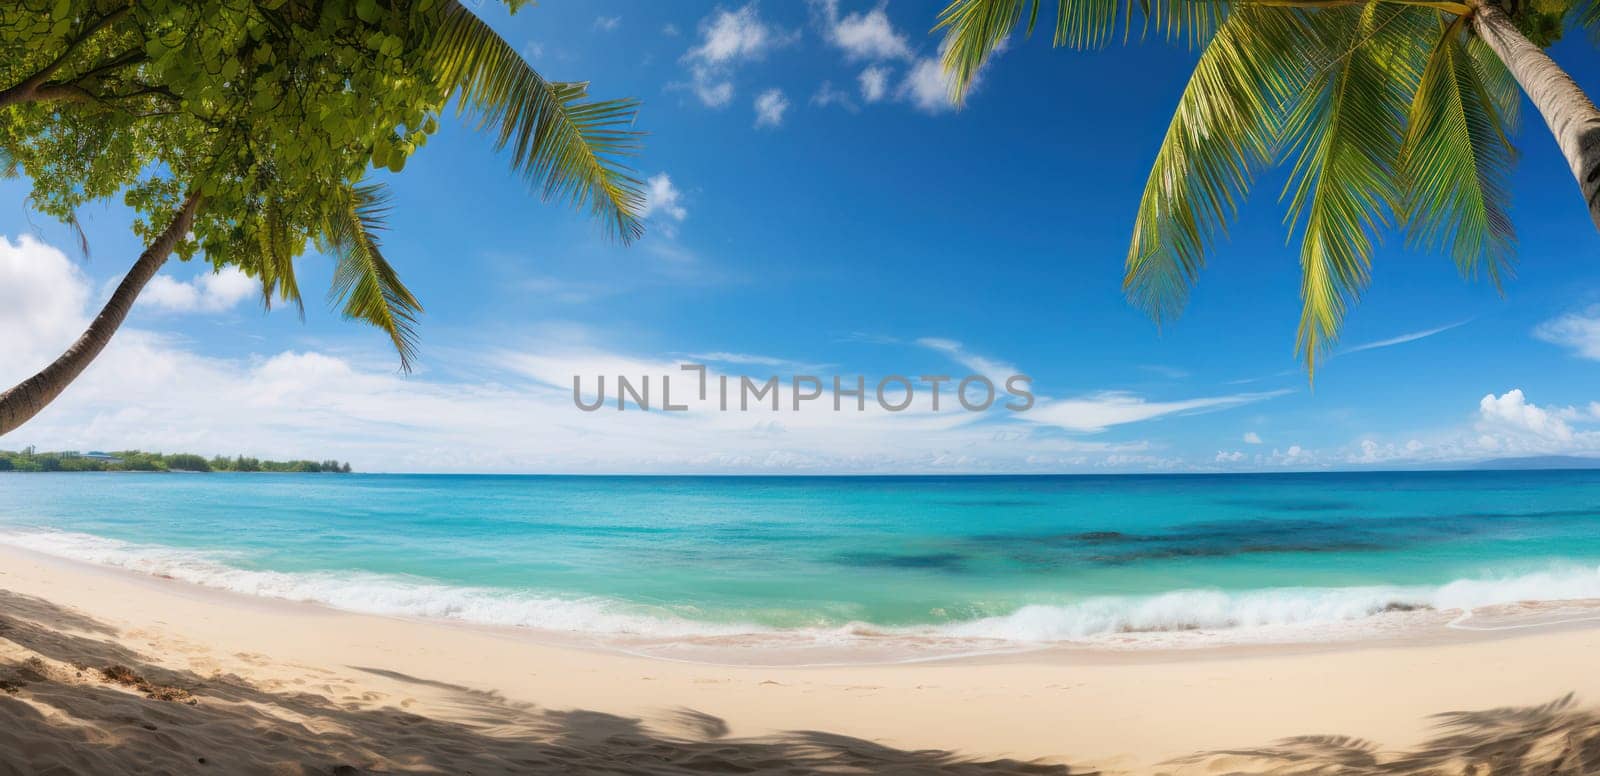 Sandy Tropic Summer: A Serene Beach Paradise - Nature Unveiled.